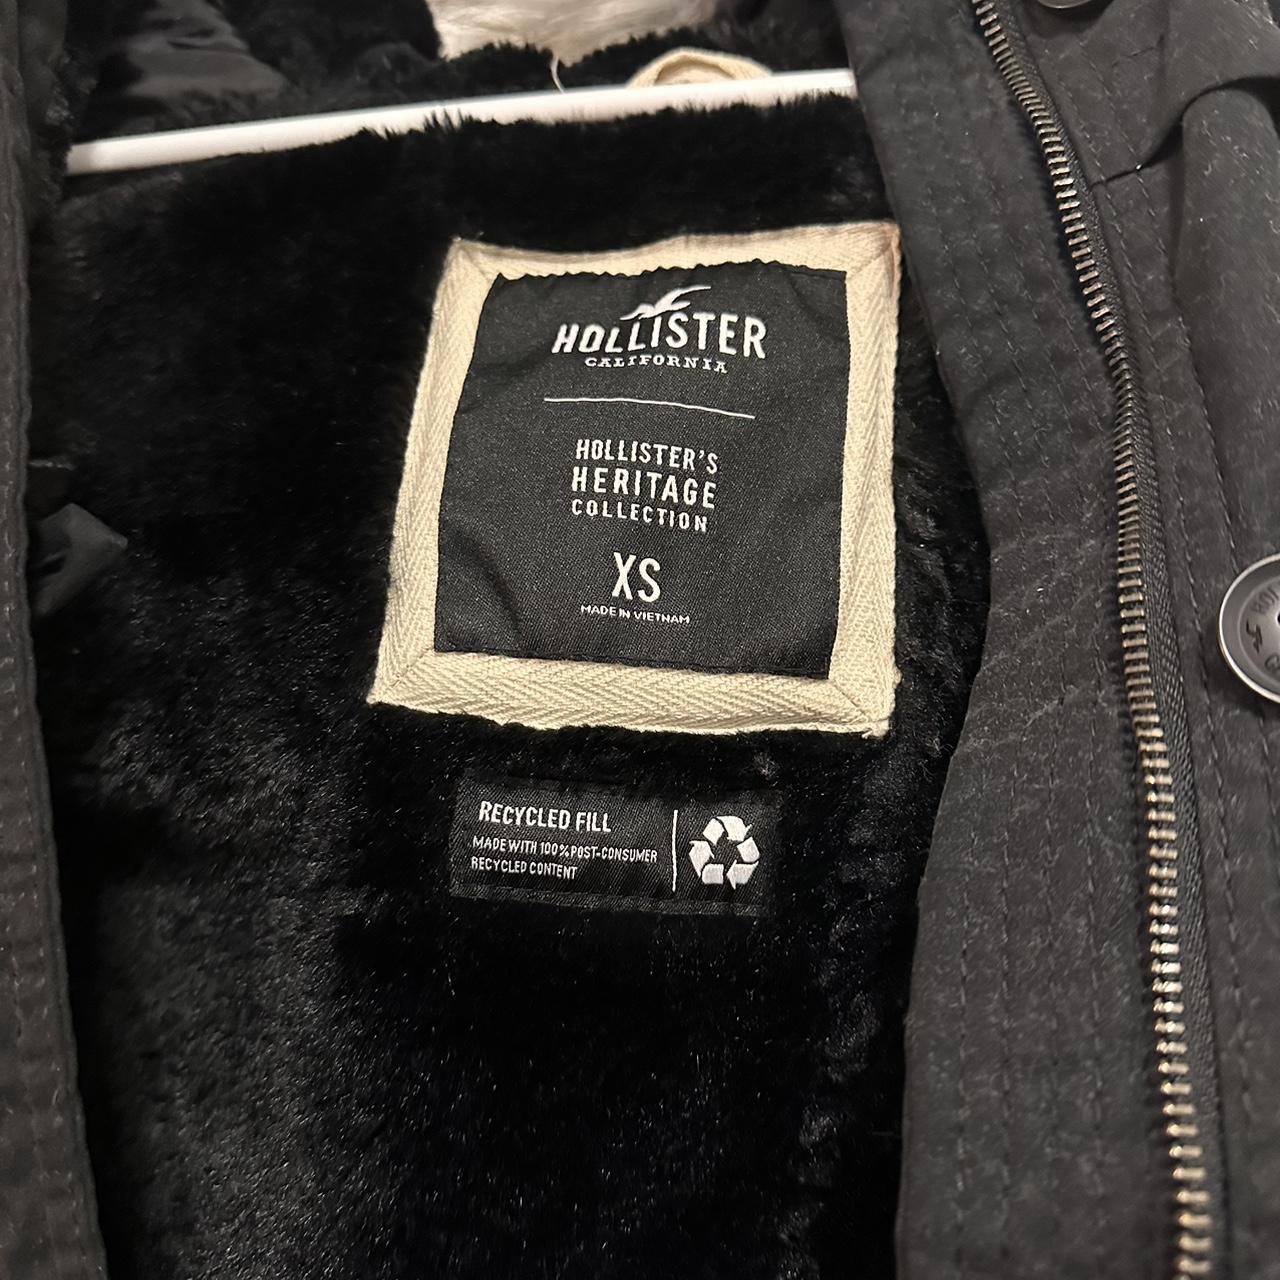 Hollister Heritage Collection Winter Coat Jacket Depop 6896